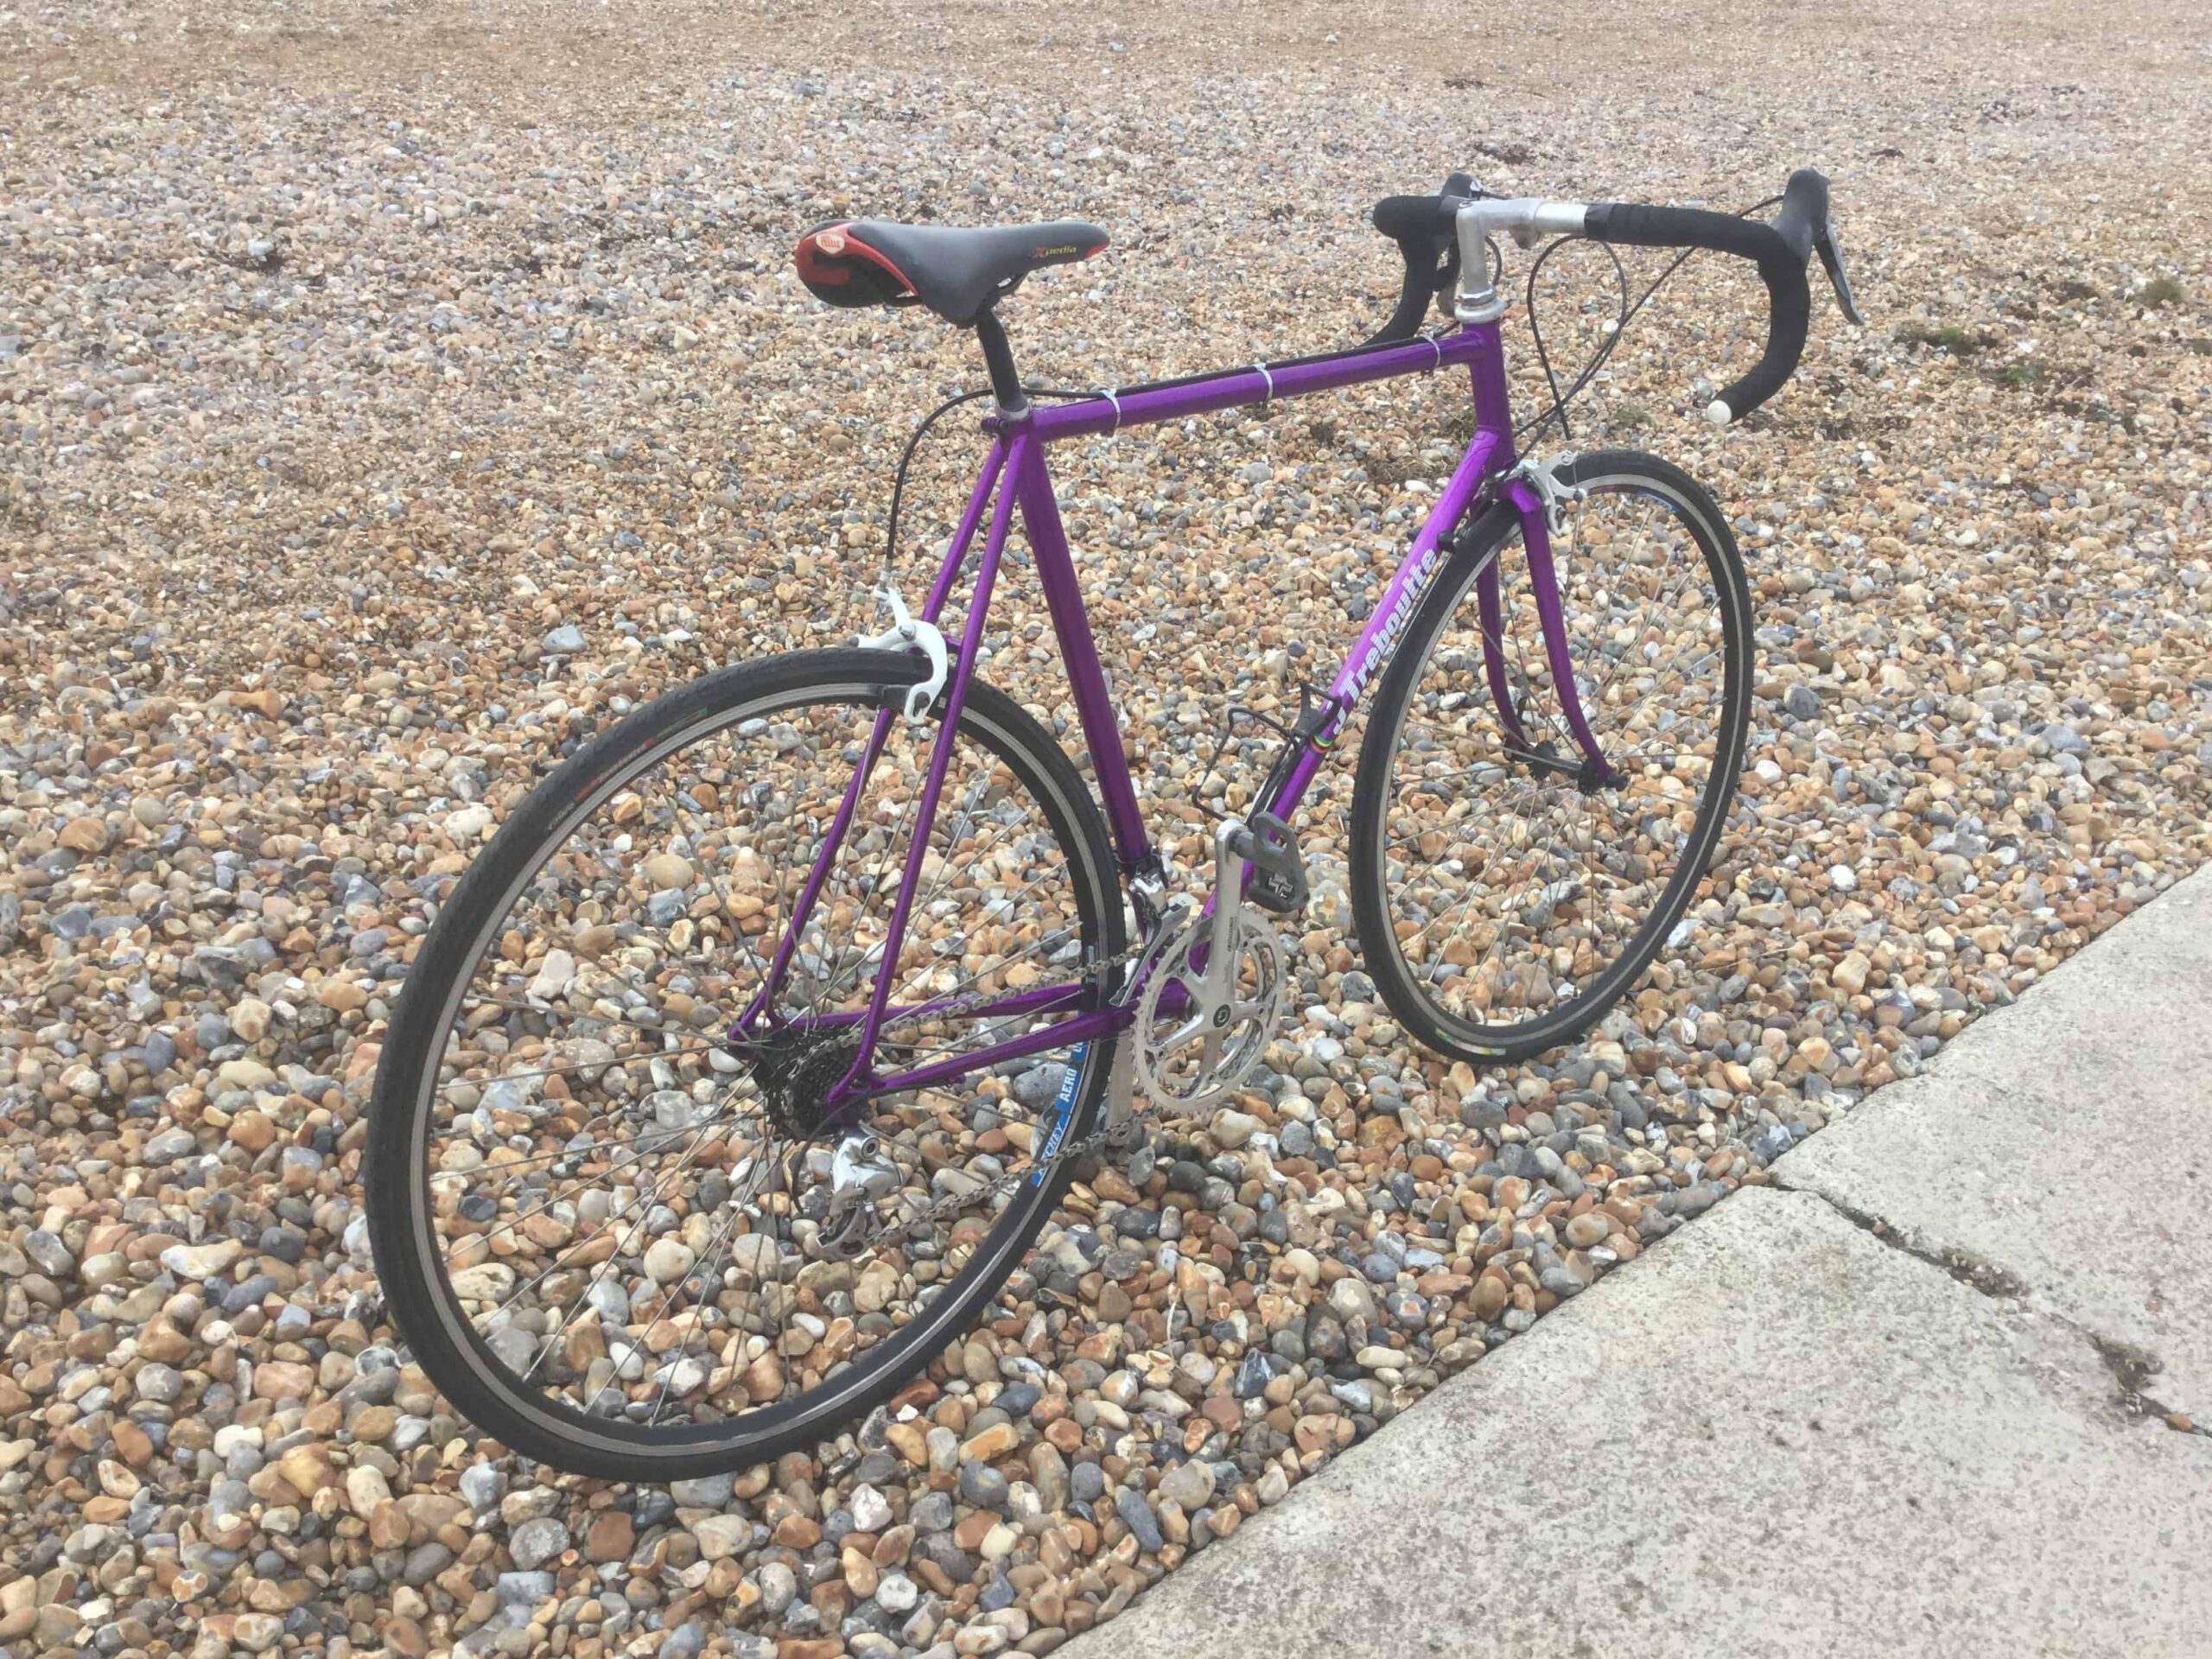  drive side image of purple bike